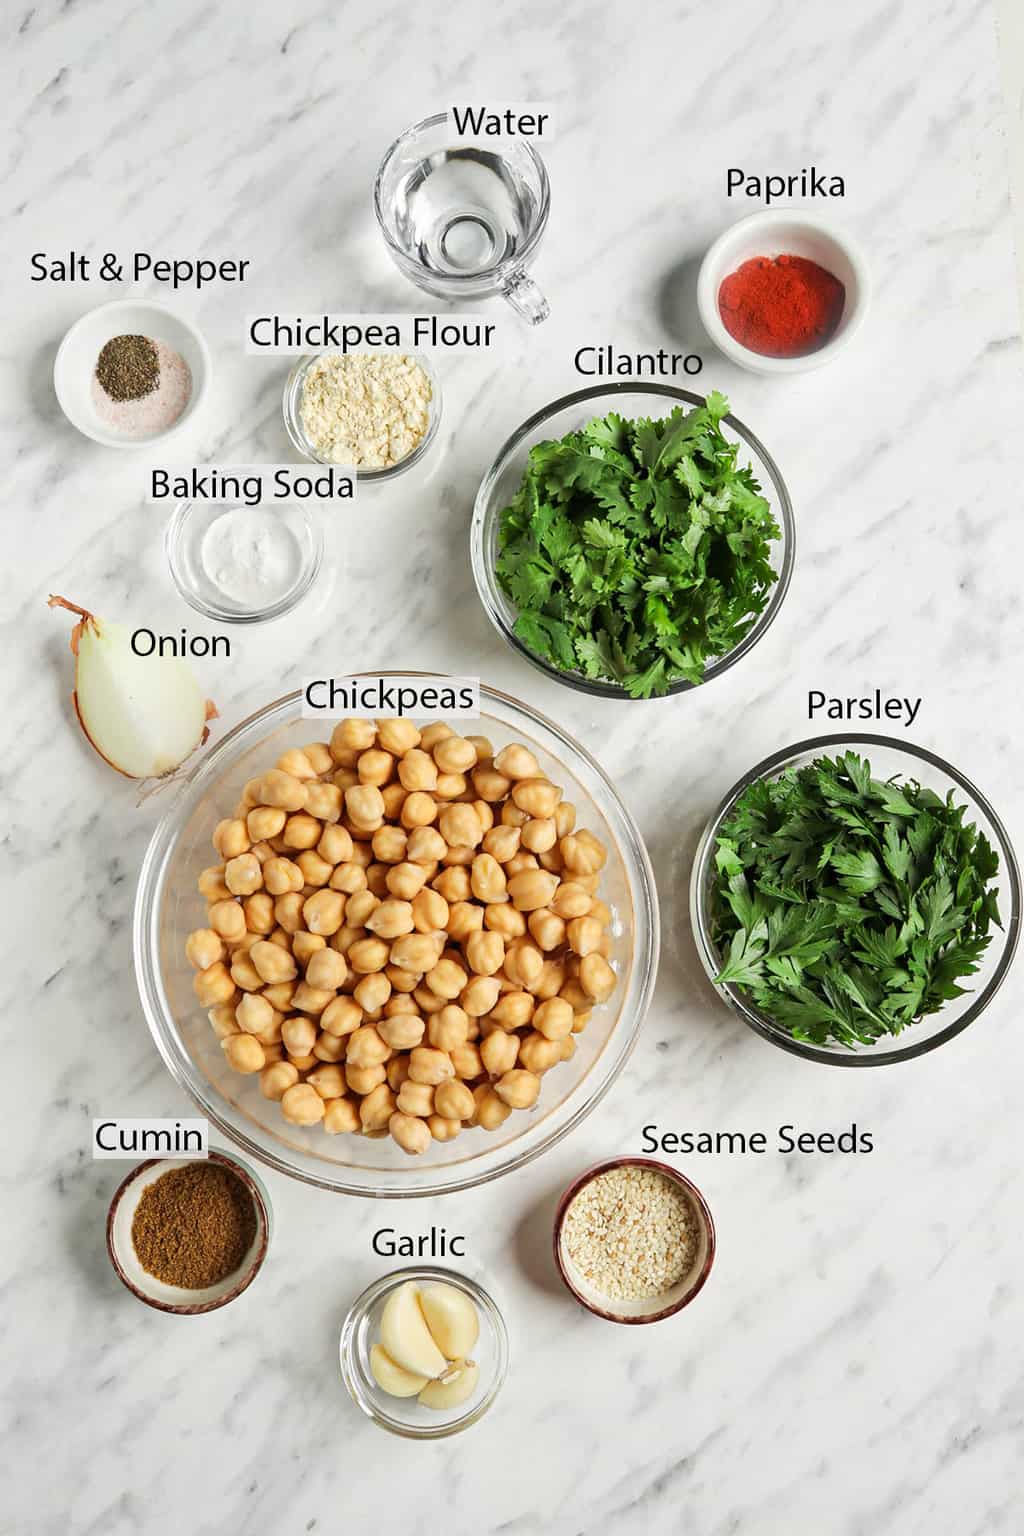 chickpeas, parsley, cilantro, sesame seeds, garlic, cumin, onion, baking soda, salt, pepper, water, chickpea flour, paprika